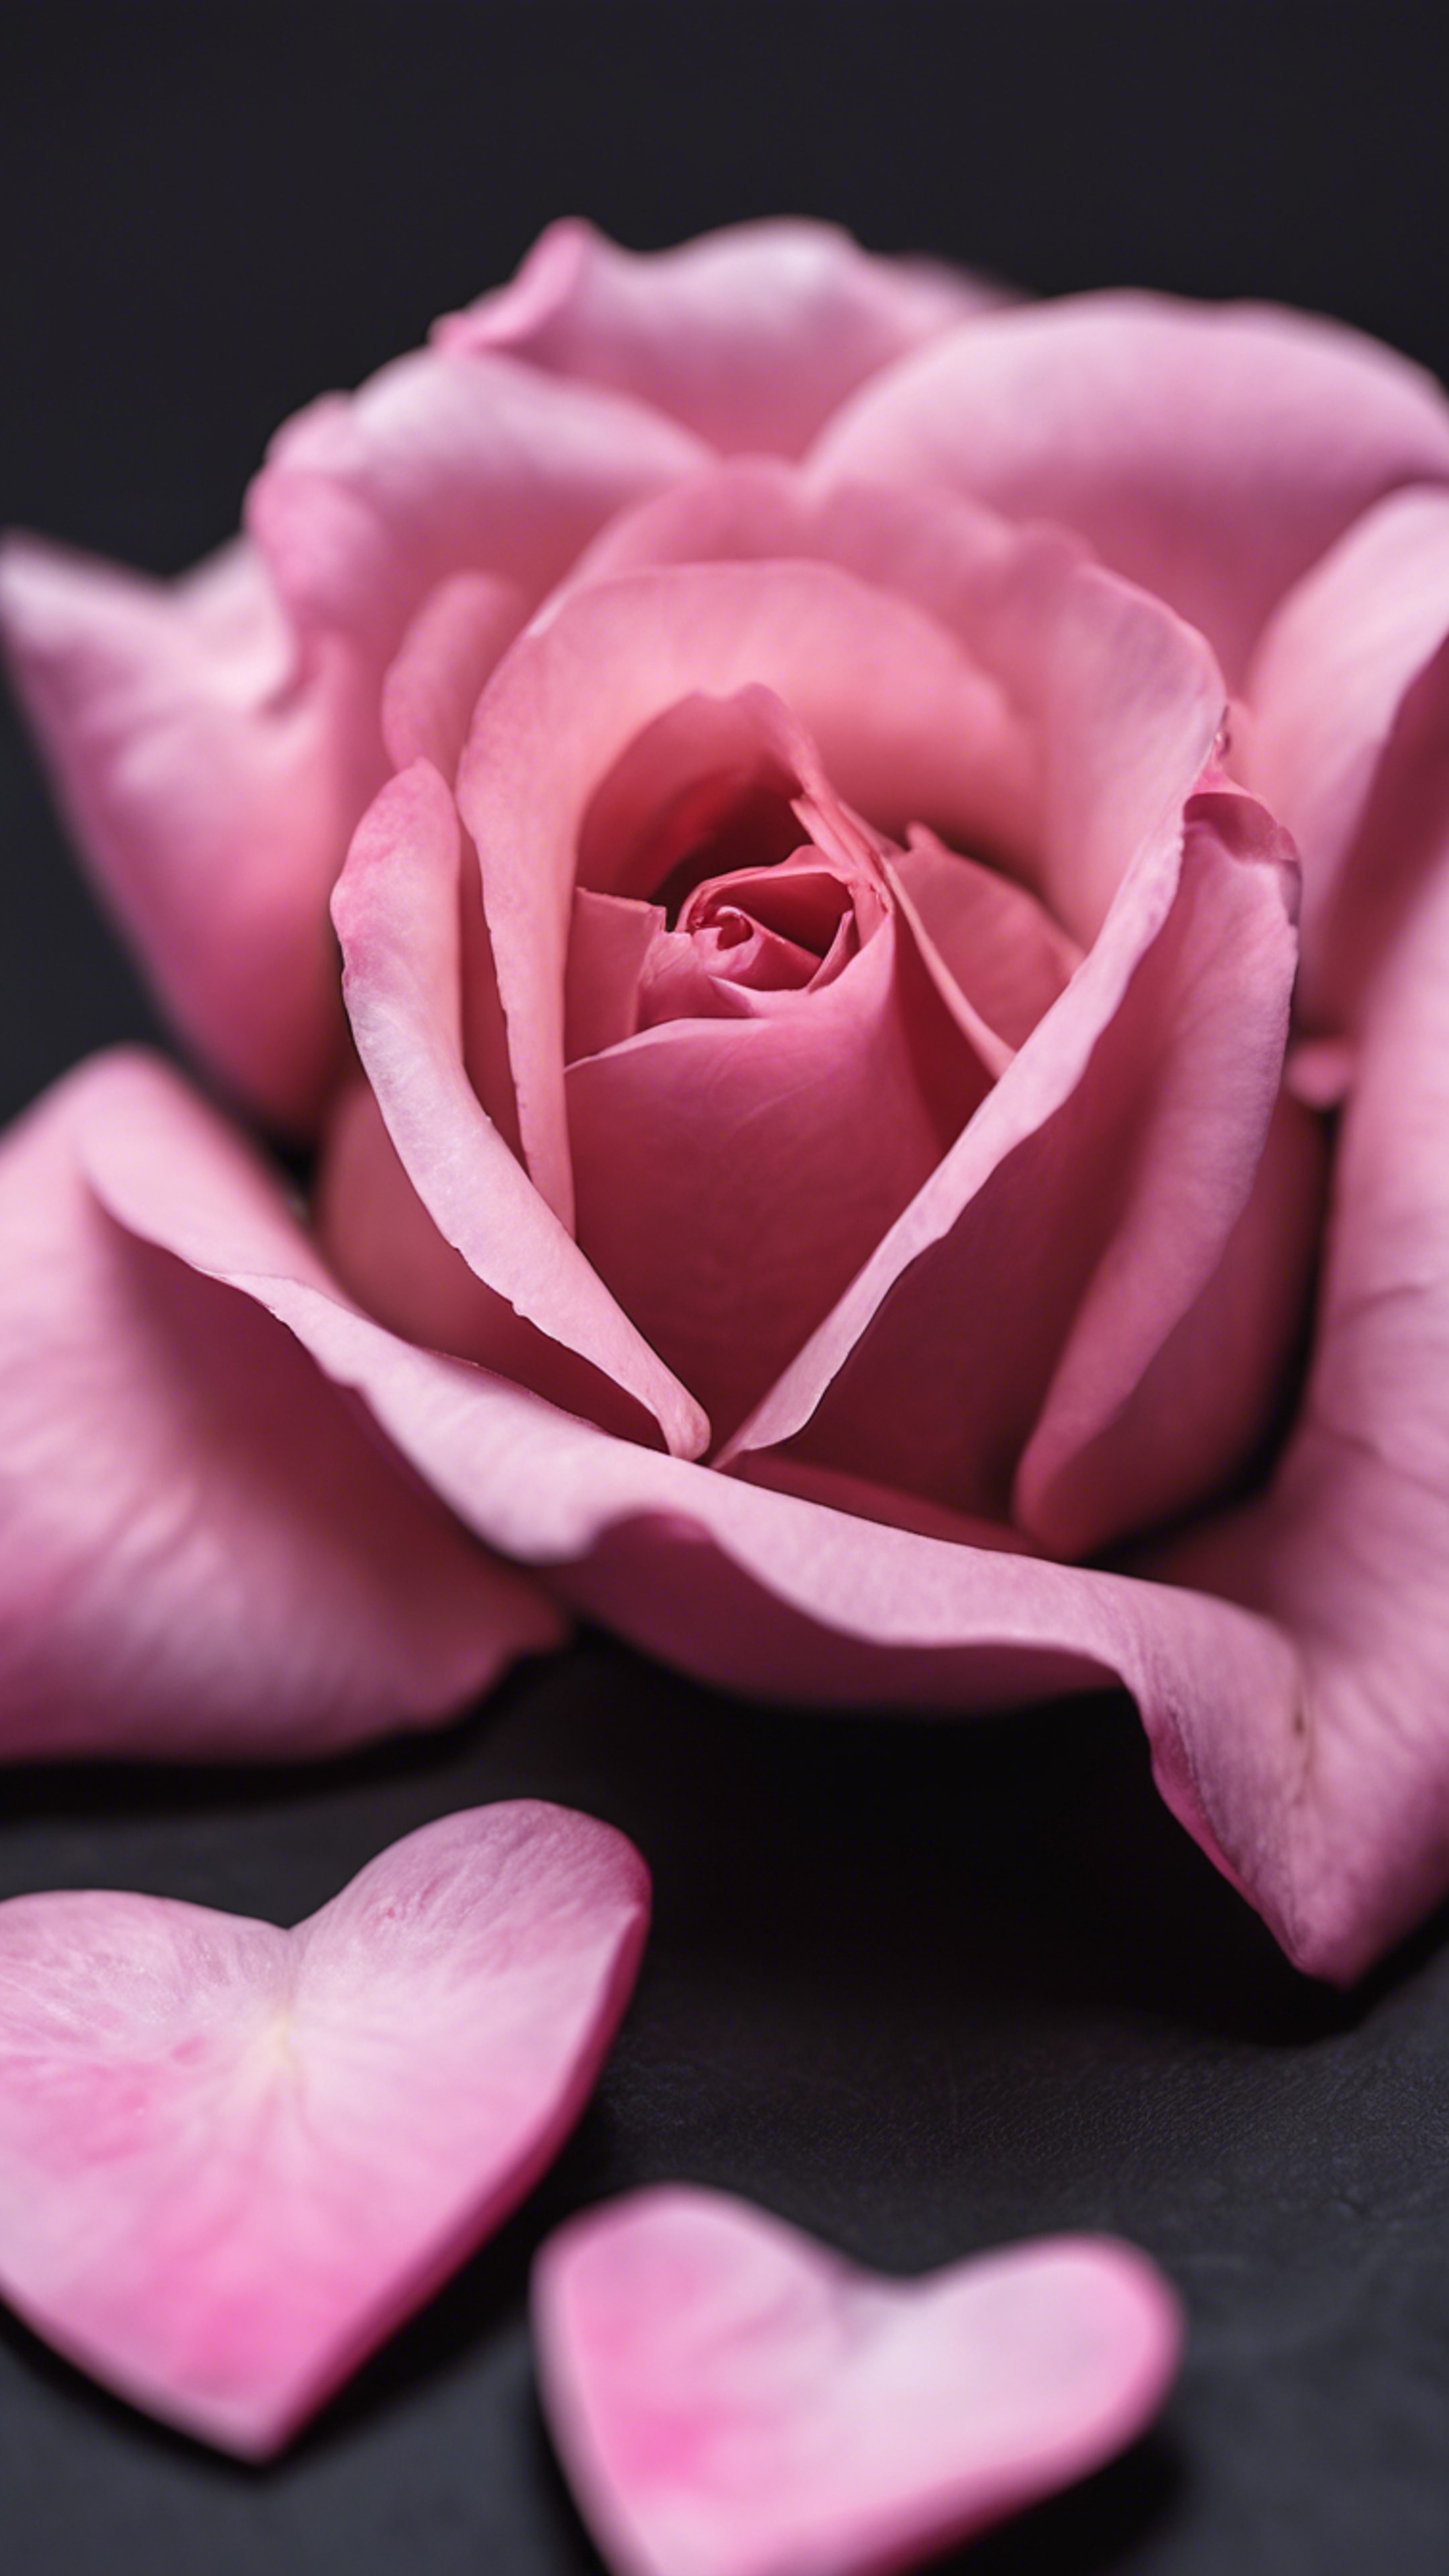 A single, perfect pink heart-shaped rose petal on a black table. Papel de parede[a14a0e64e3fd4358915b]